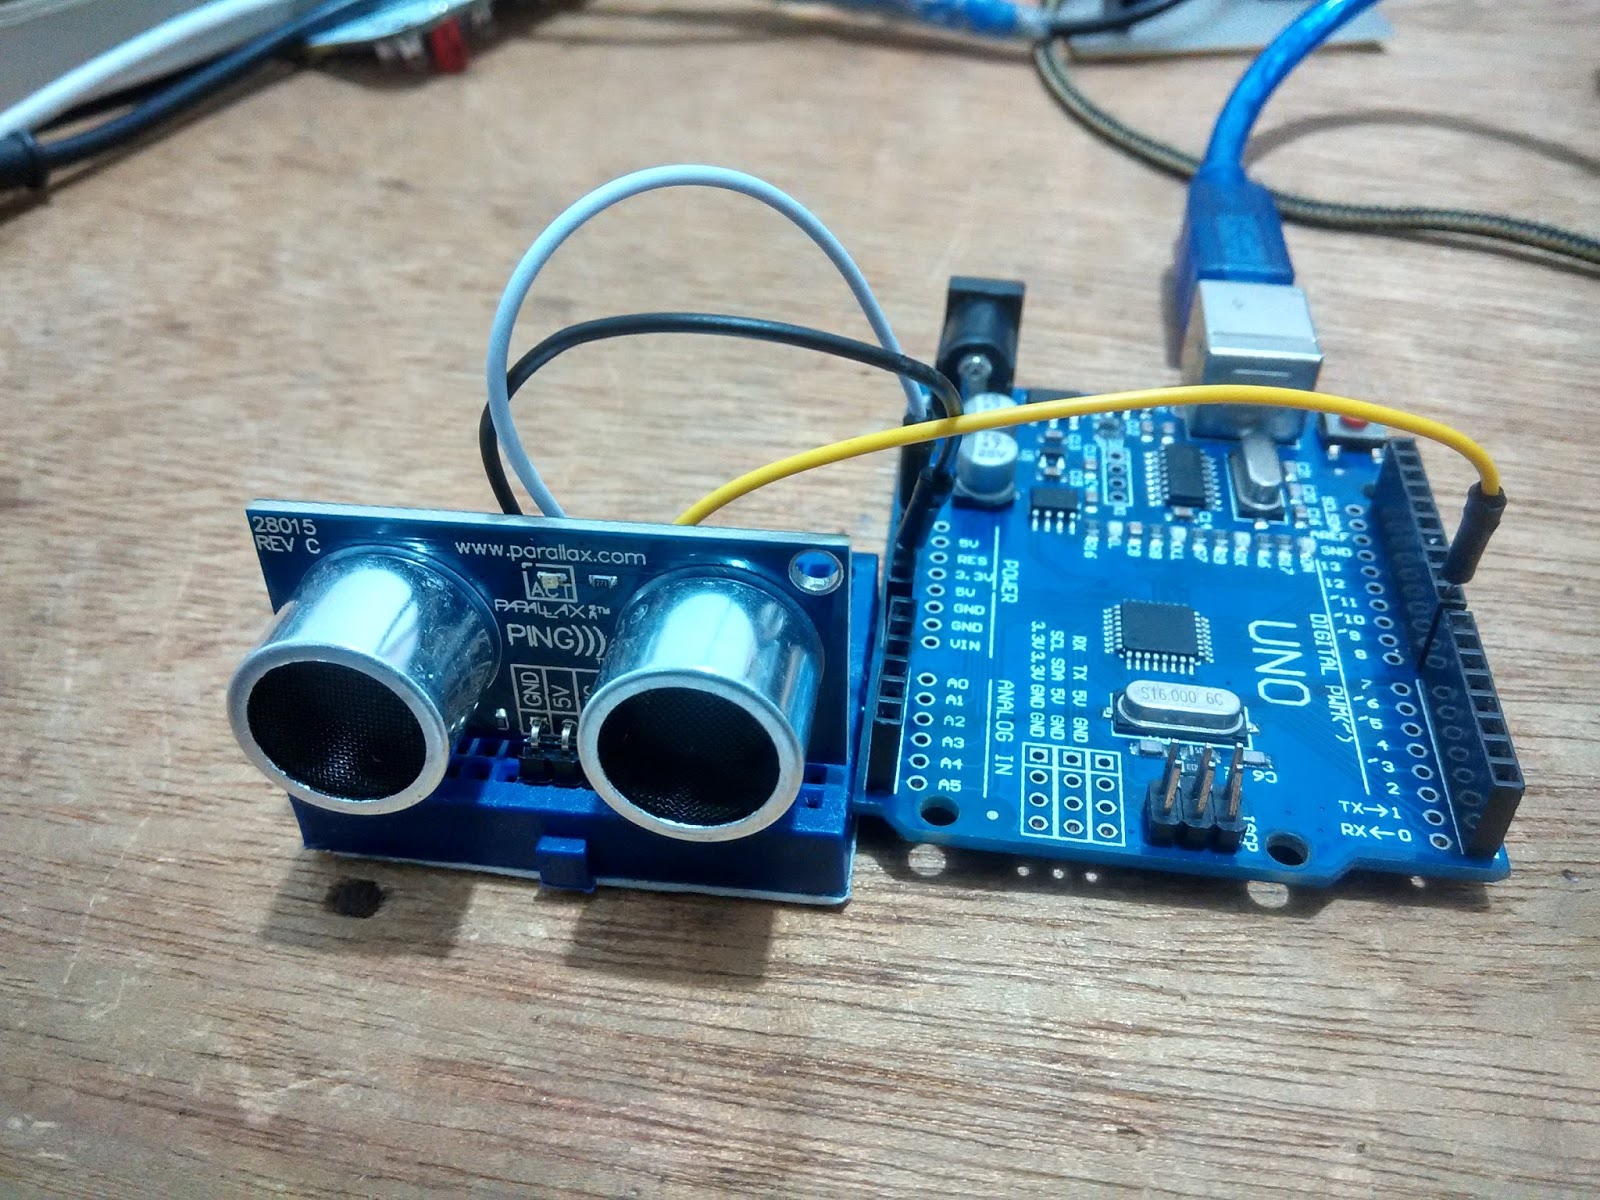 Датчик давления ардуино. Ультрасоник ардуино. Ultrasonic sensor v3.0. Ultrasonic sensor Arduino. Ultrasonic sensor Arduino code.